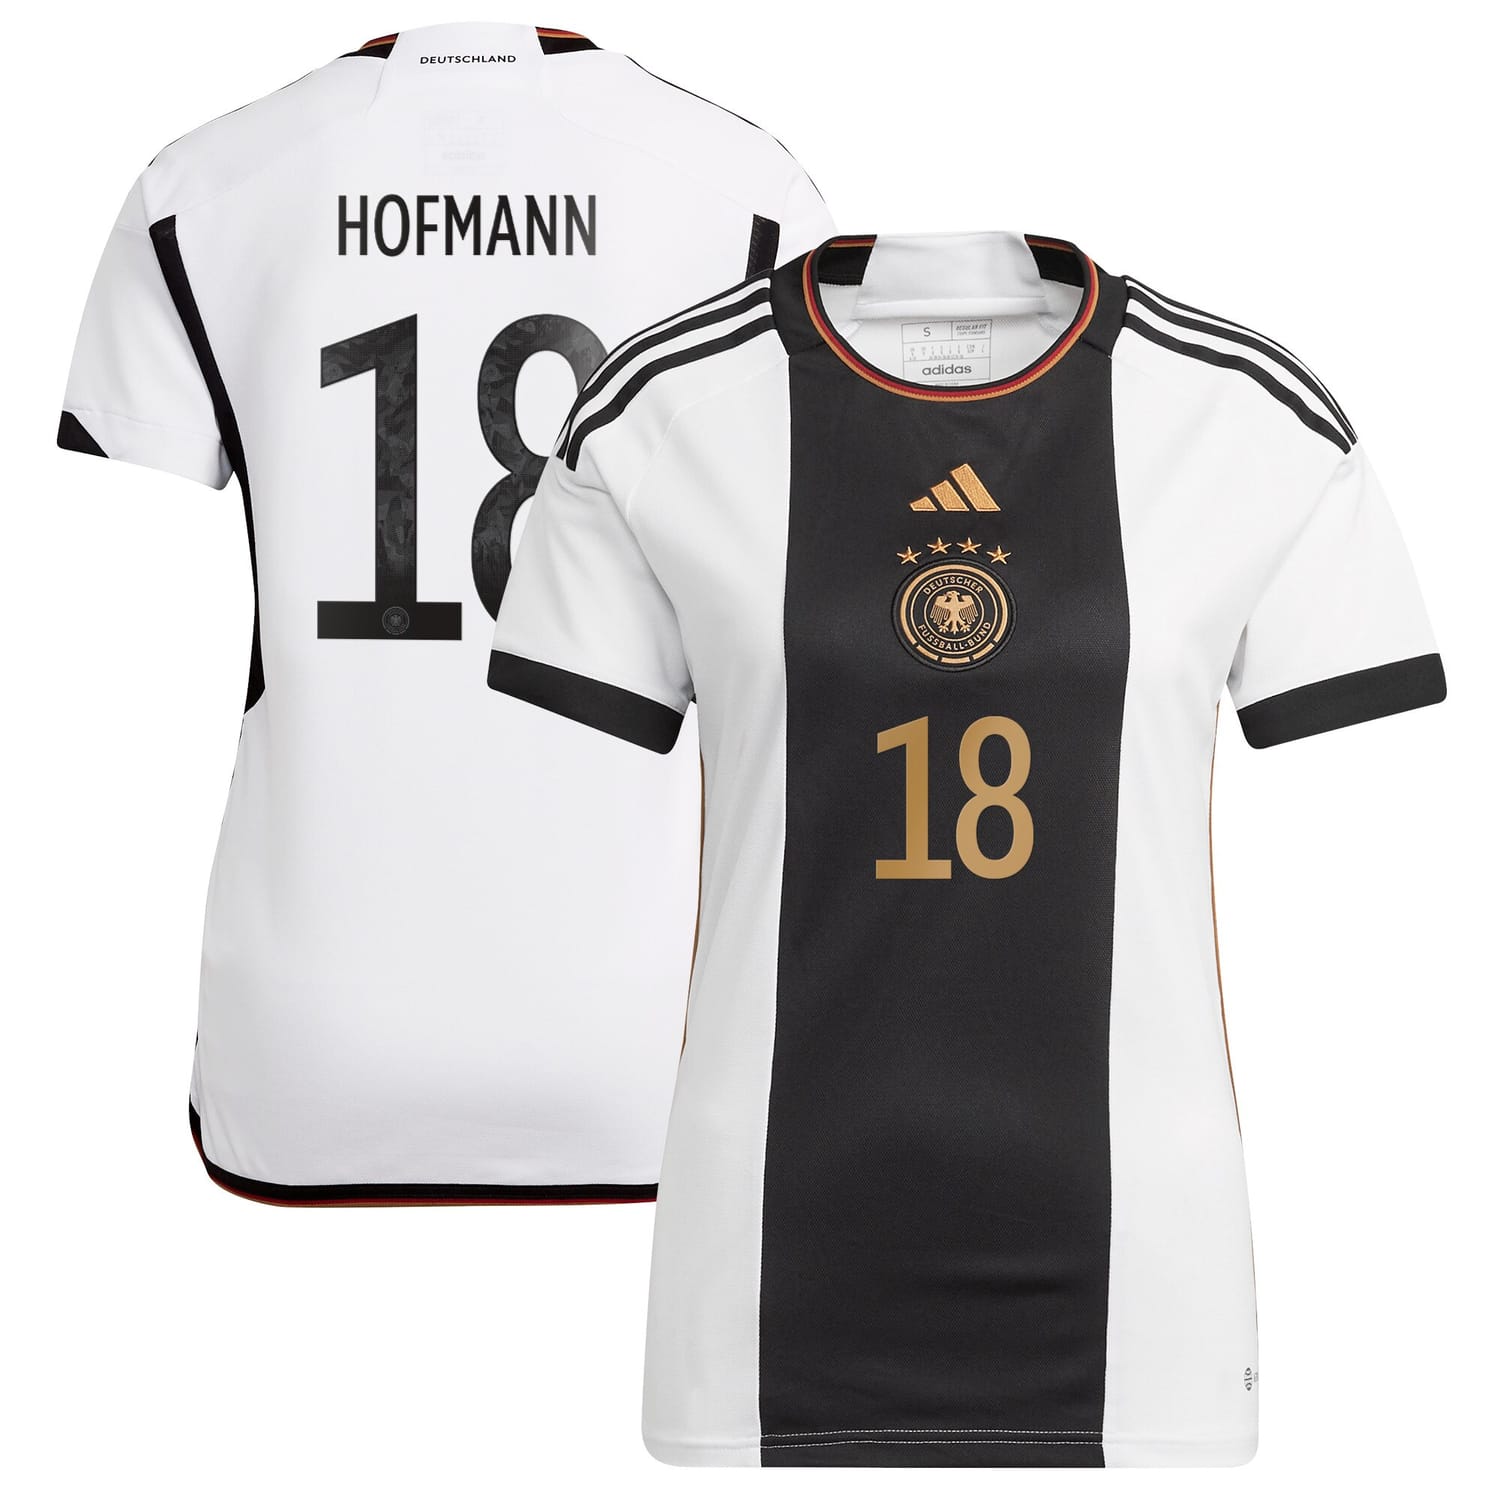 Germany National Team Home Jersey Shirt player Jonas Hofmann 18 printing for Women